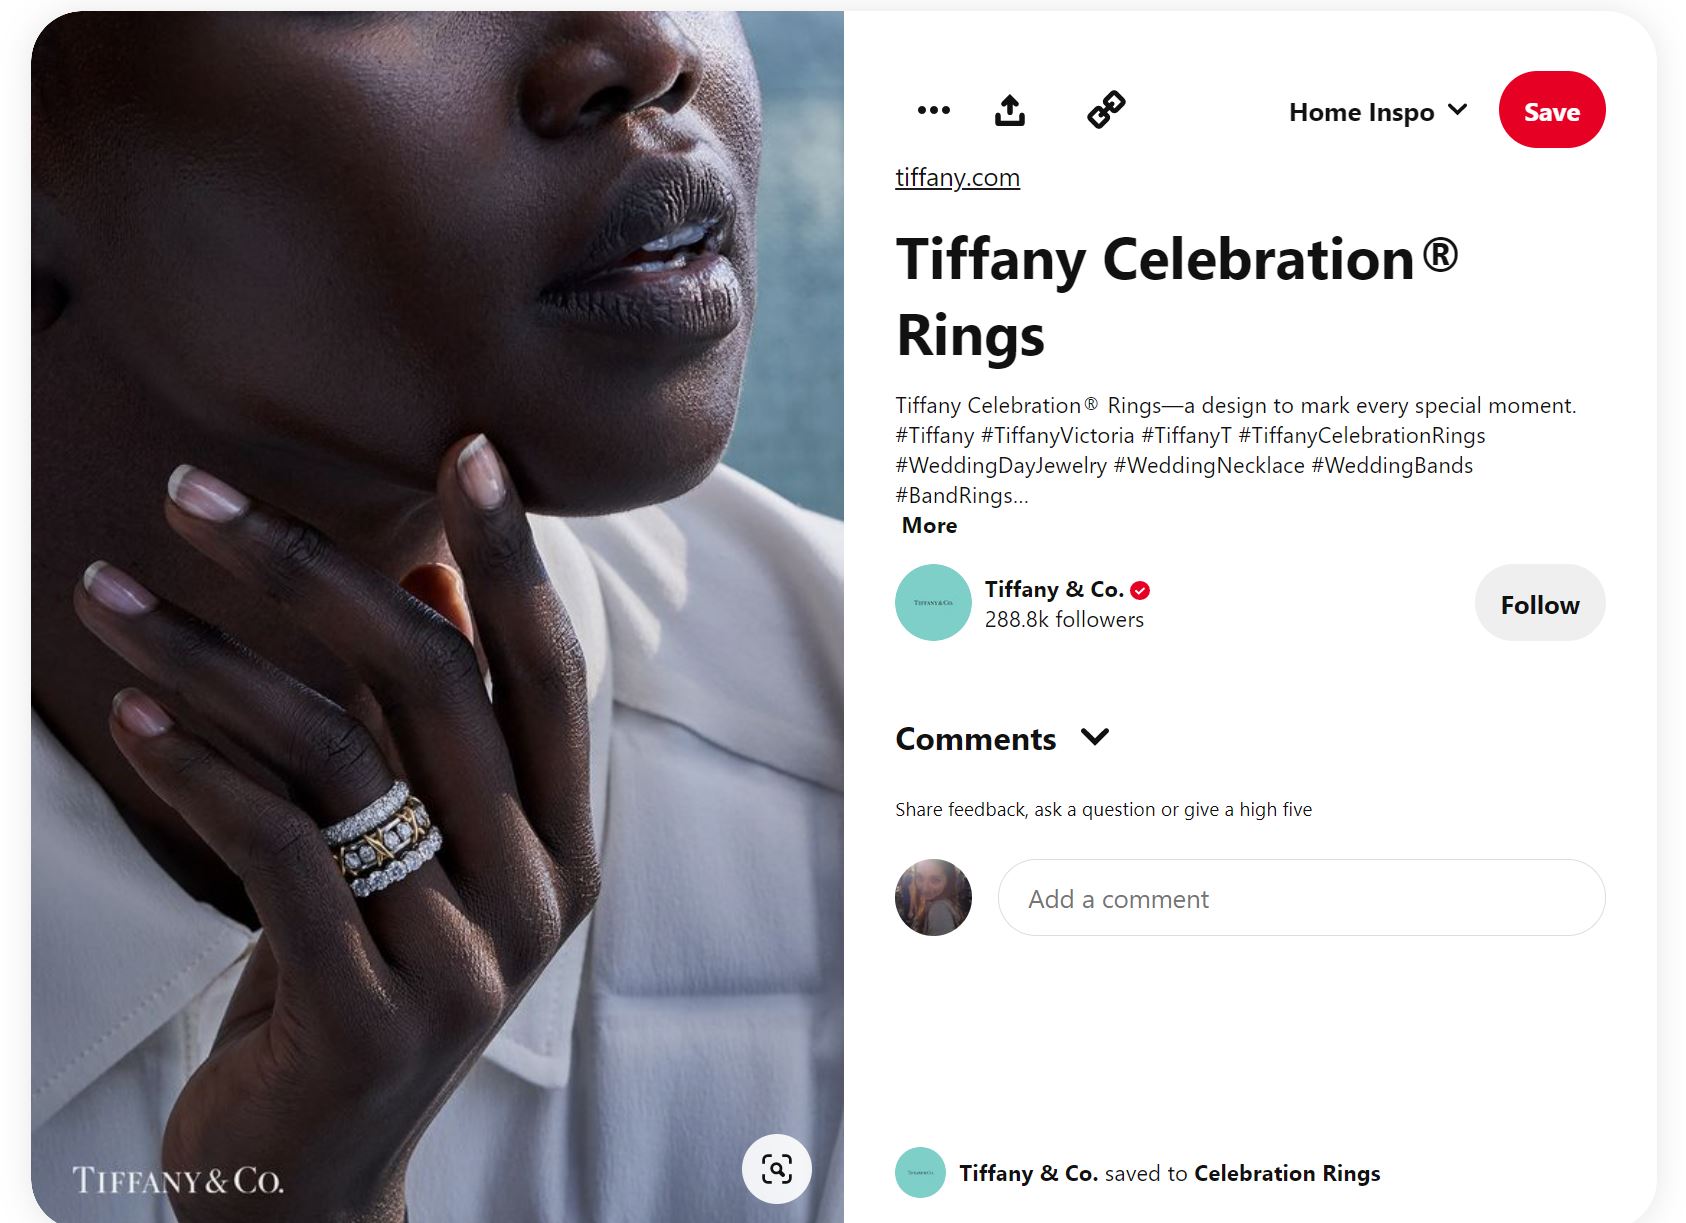 Tiffany & Co. on Instagram: Introducing the Tiffany Lock pendant